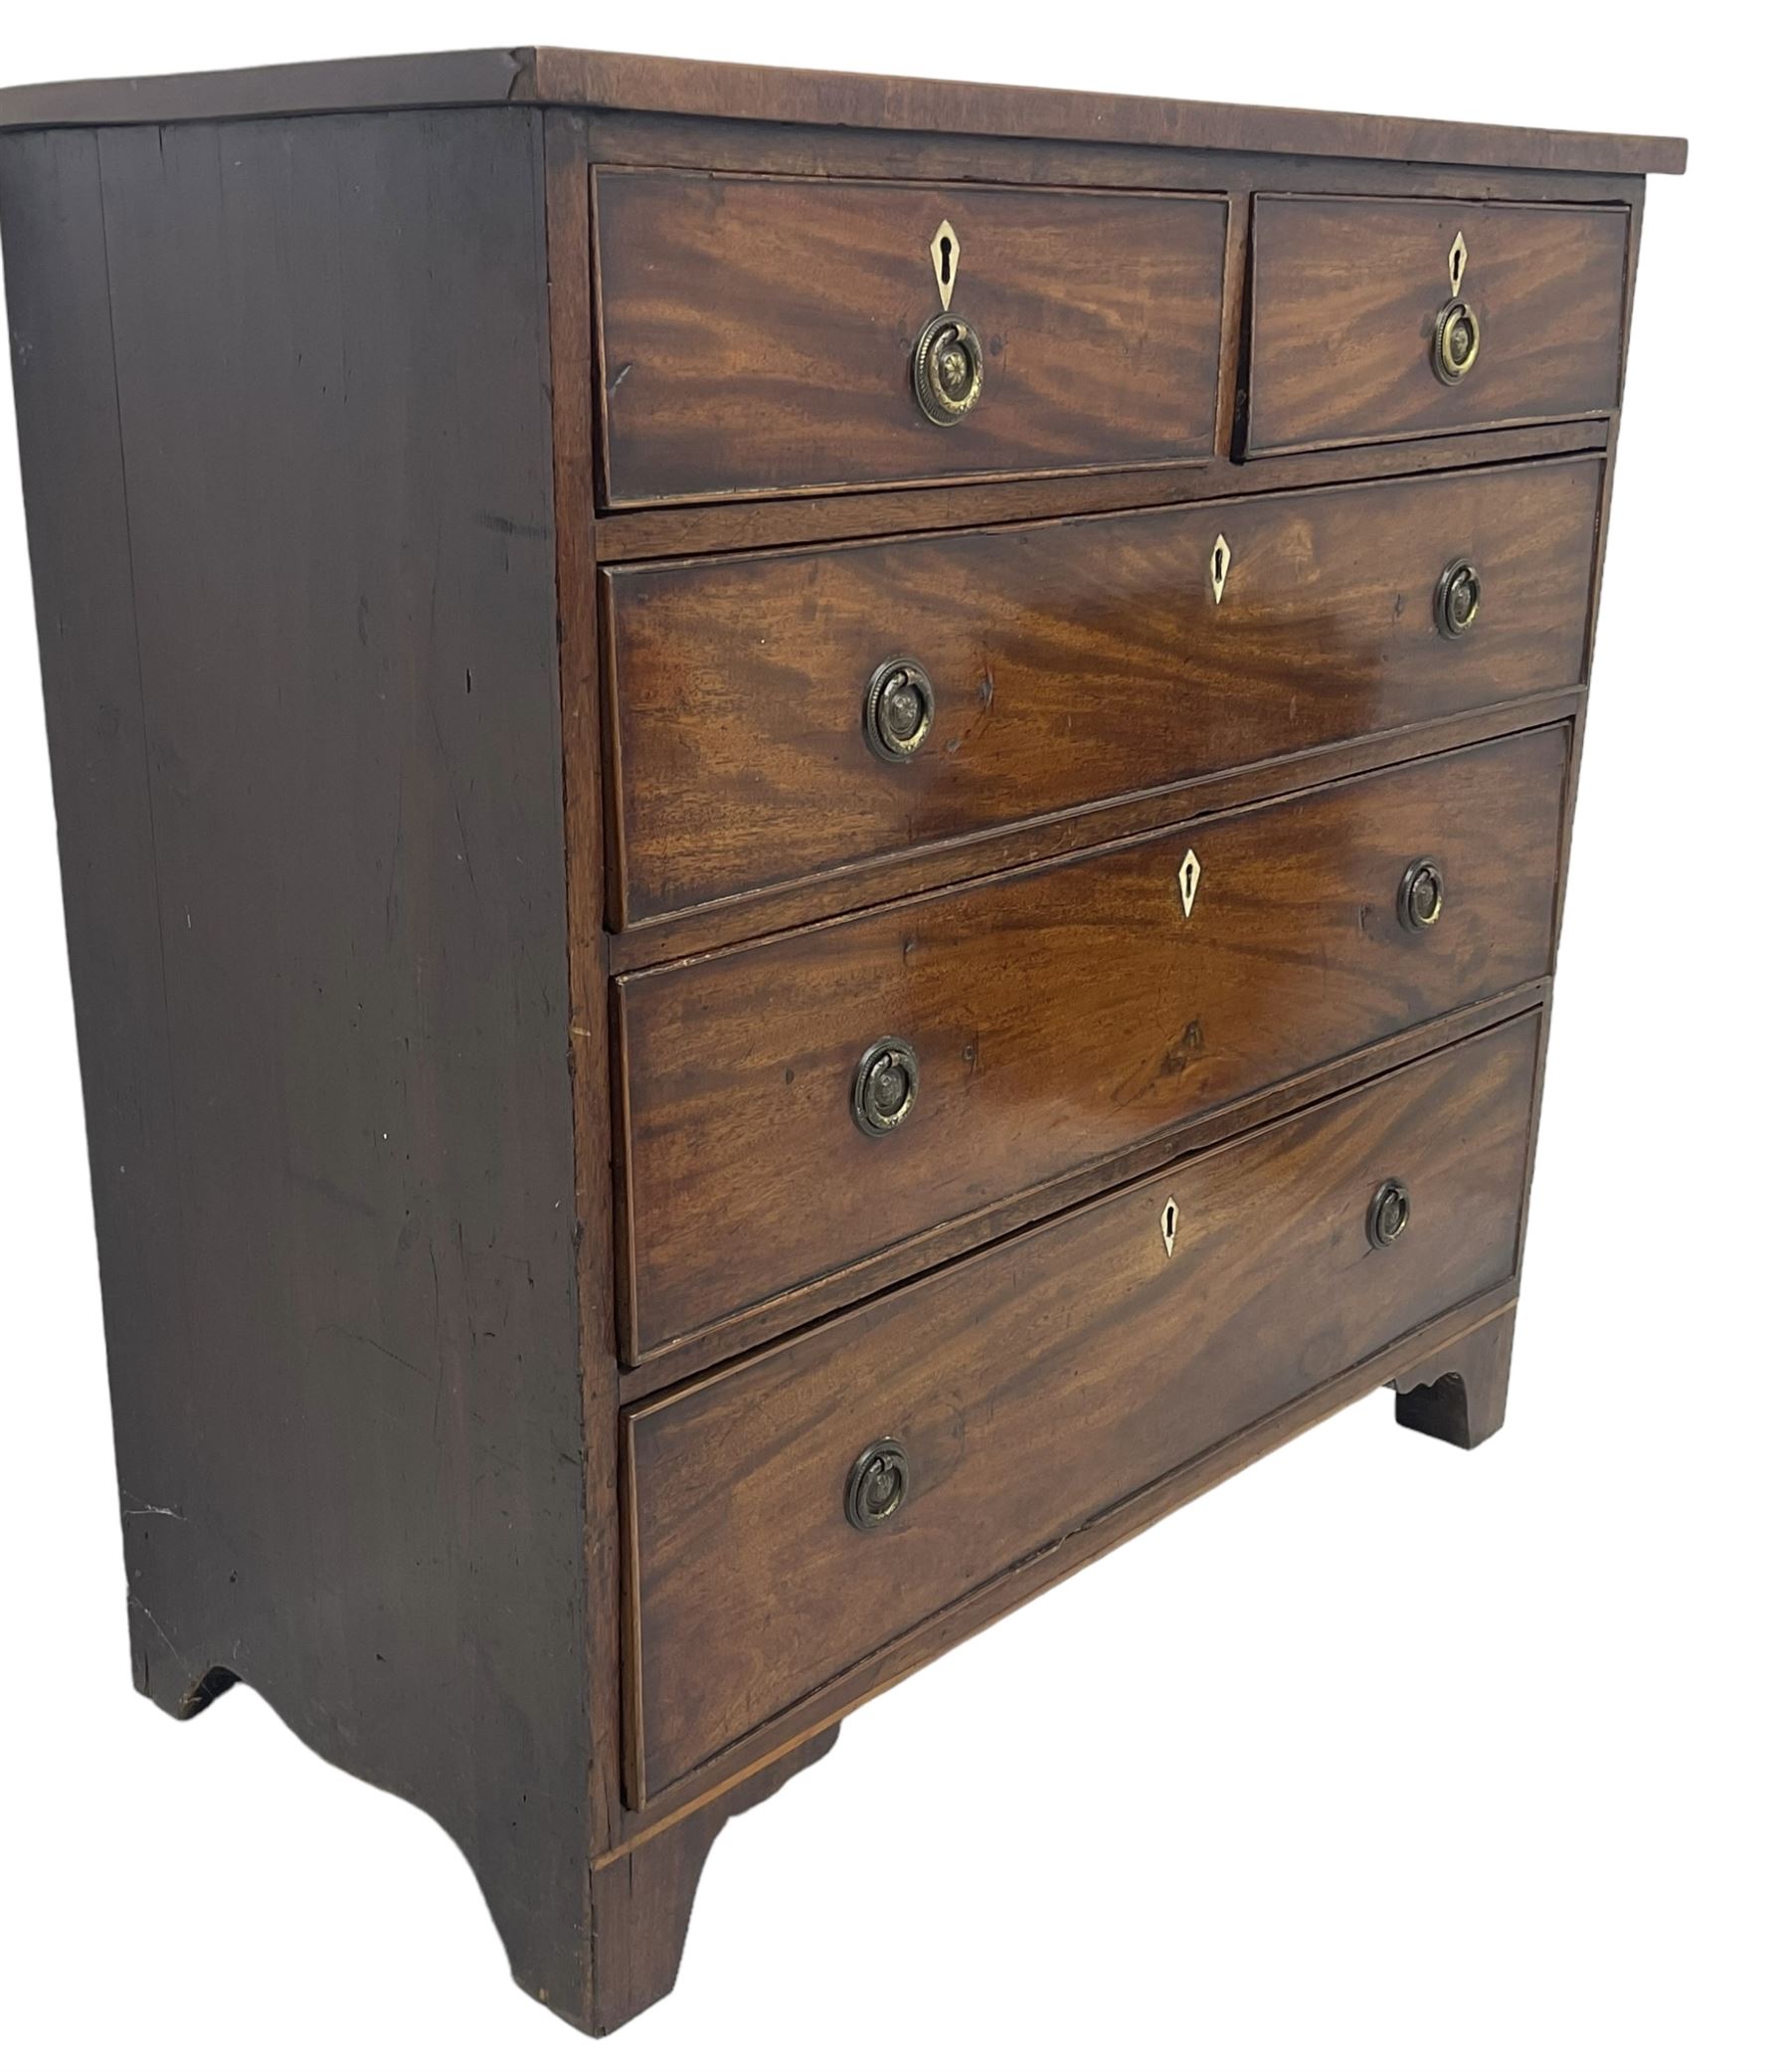 George III mahogany chest - Image 7 of 7